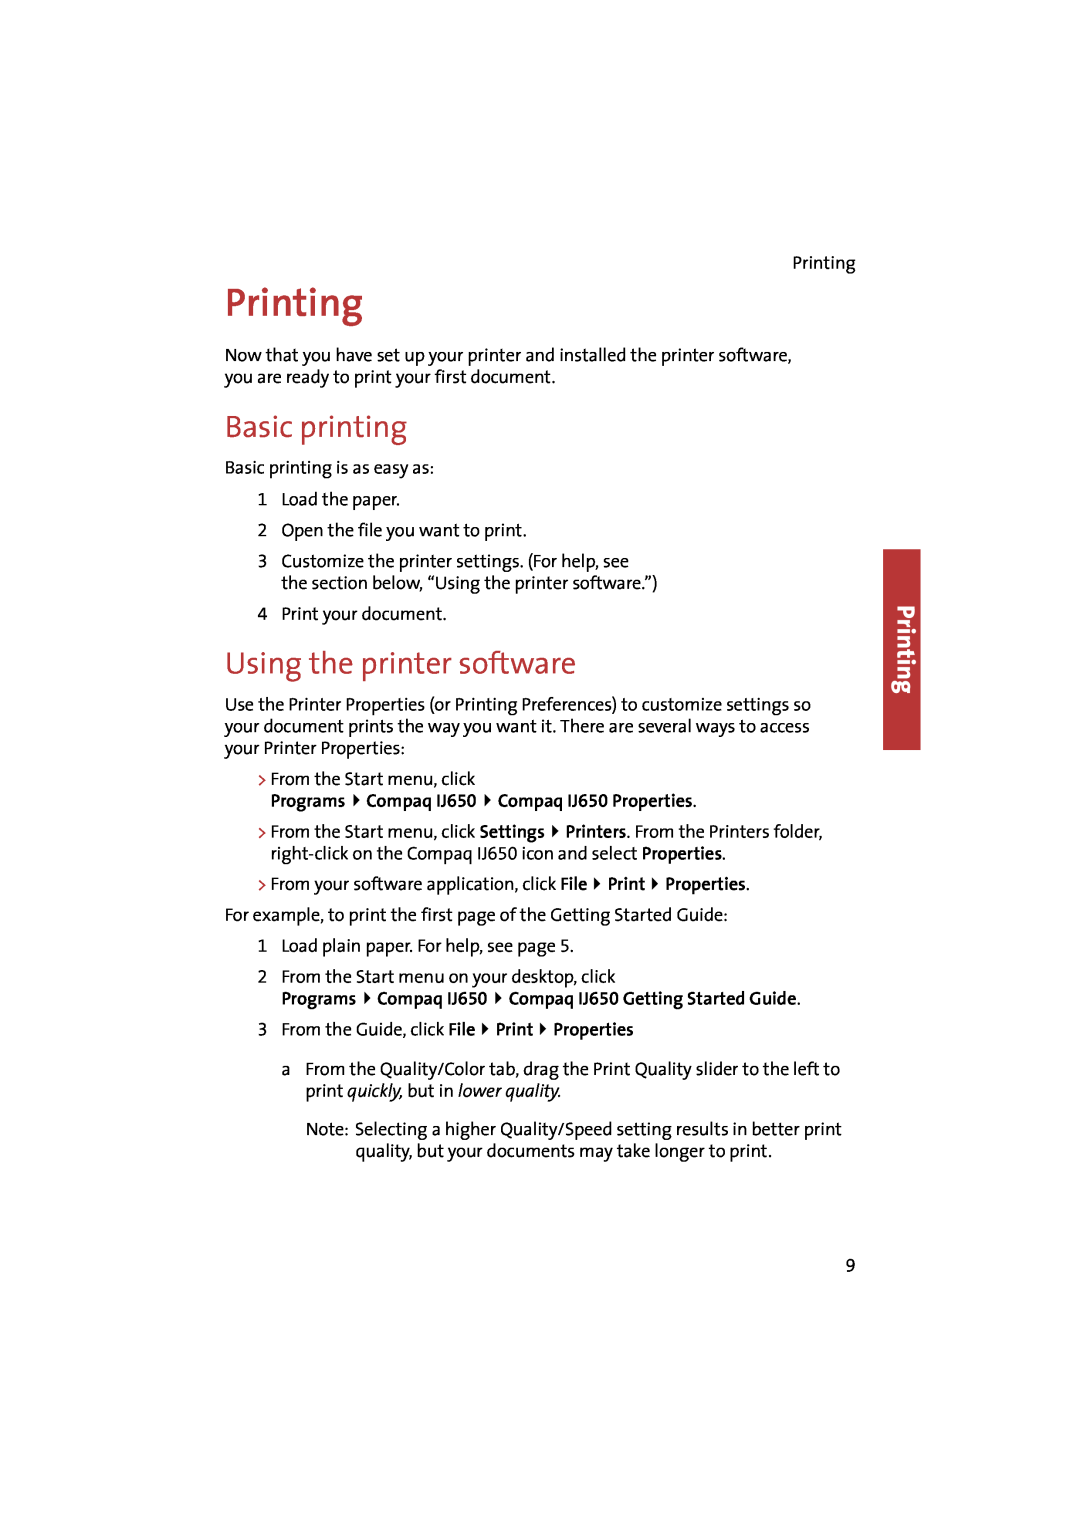 Compaq manual Printing, Basic printing, Using the printer software, Programs Compaq IJ650 Compaq IJ650 Properties 